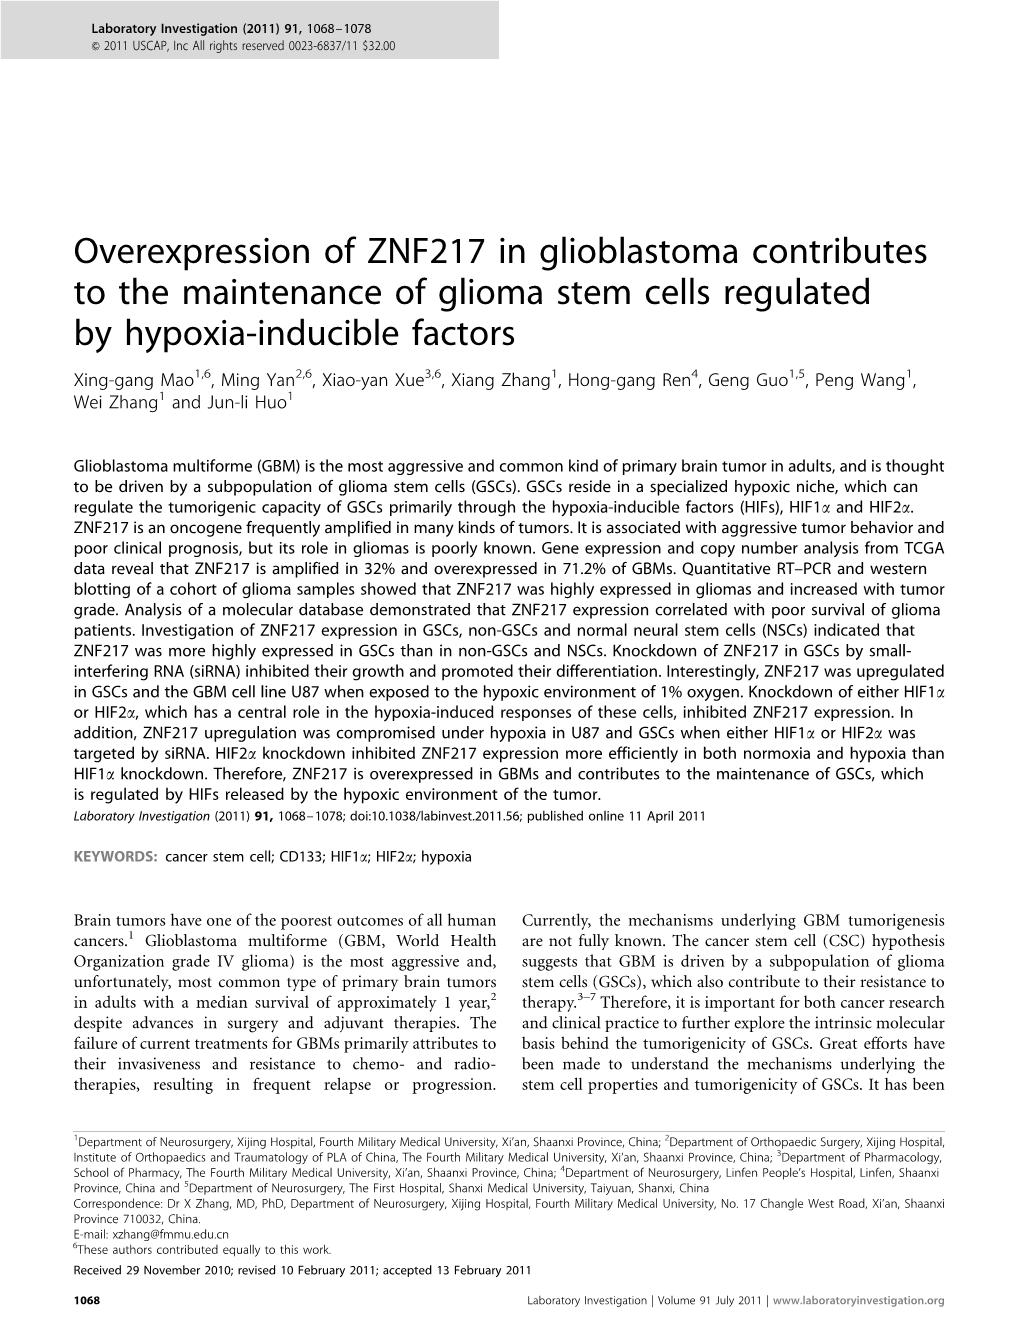 Overexpression of ZNF217 in Glioblastoma Contributes to The